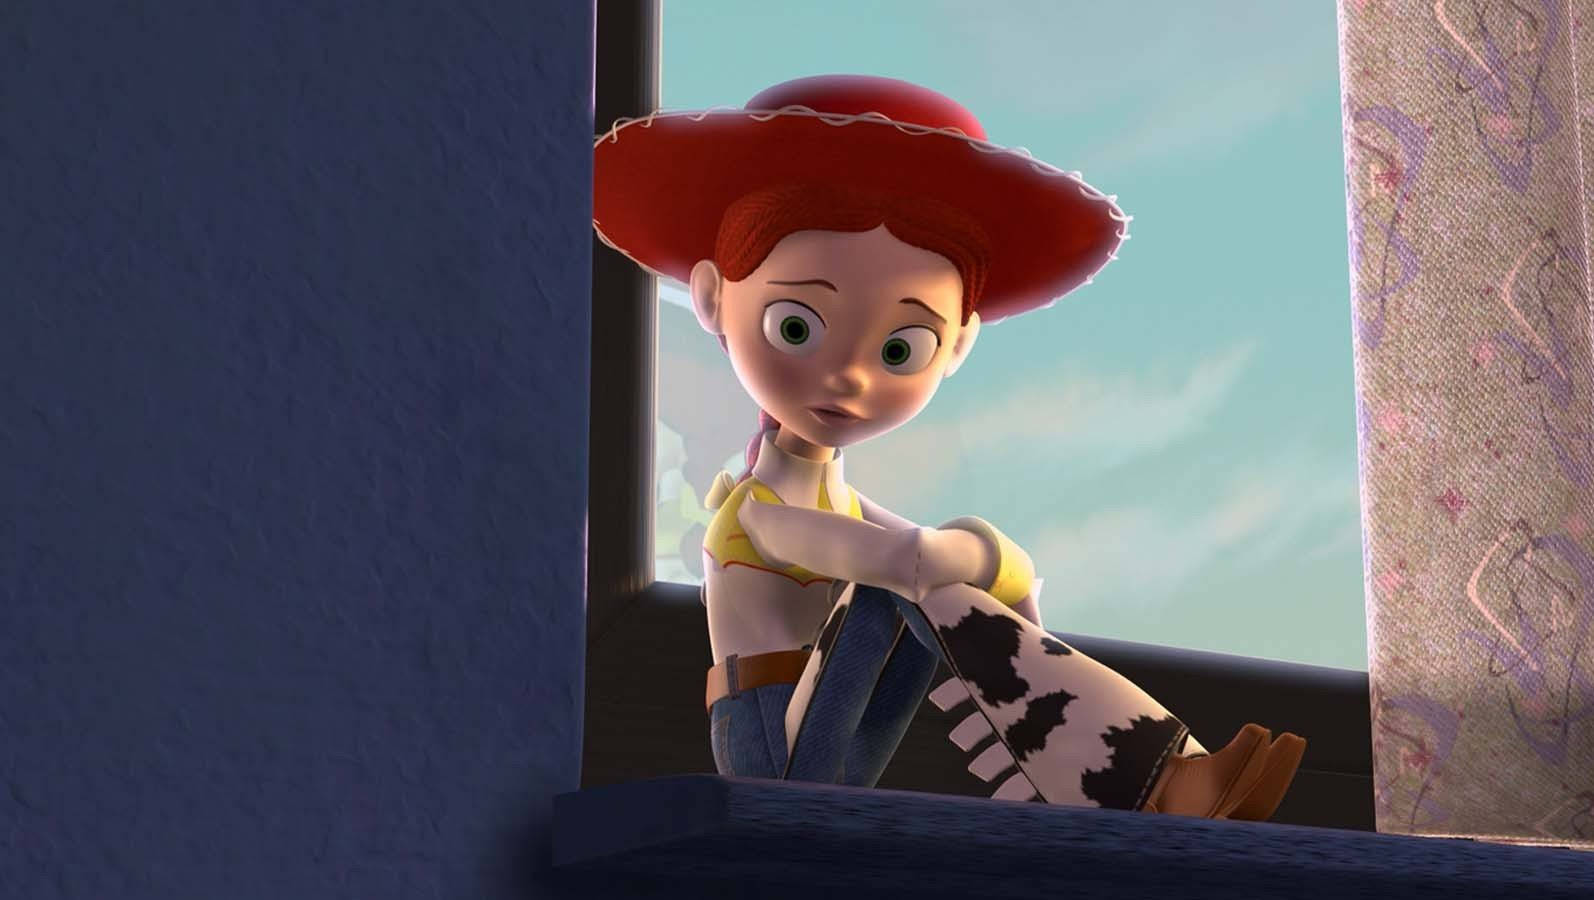 Jessie Toy Story Seated Beside Window Wallpaper